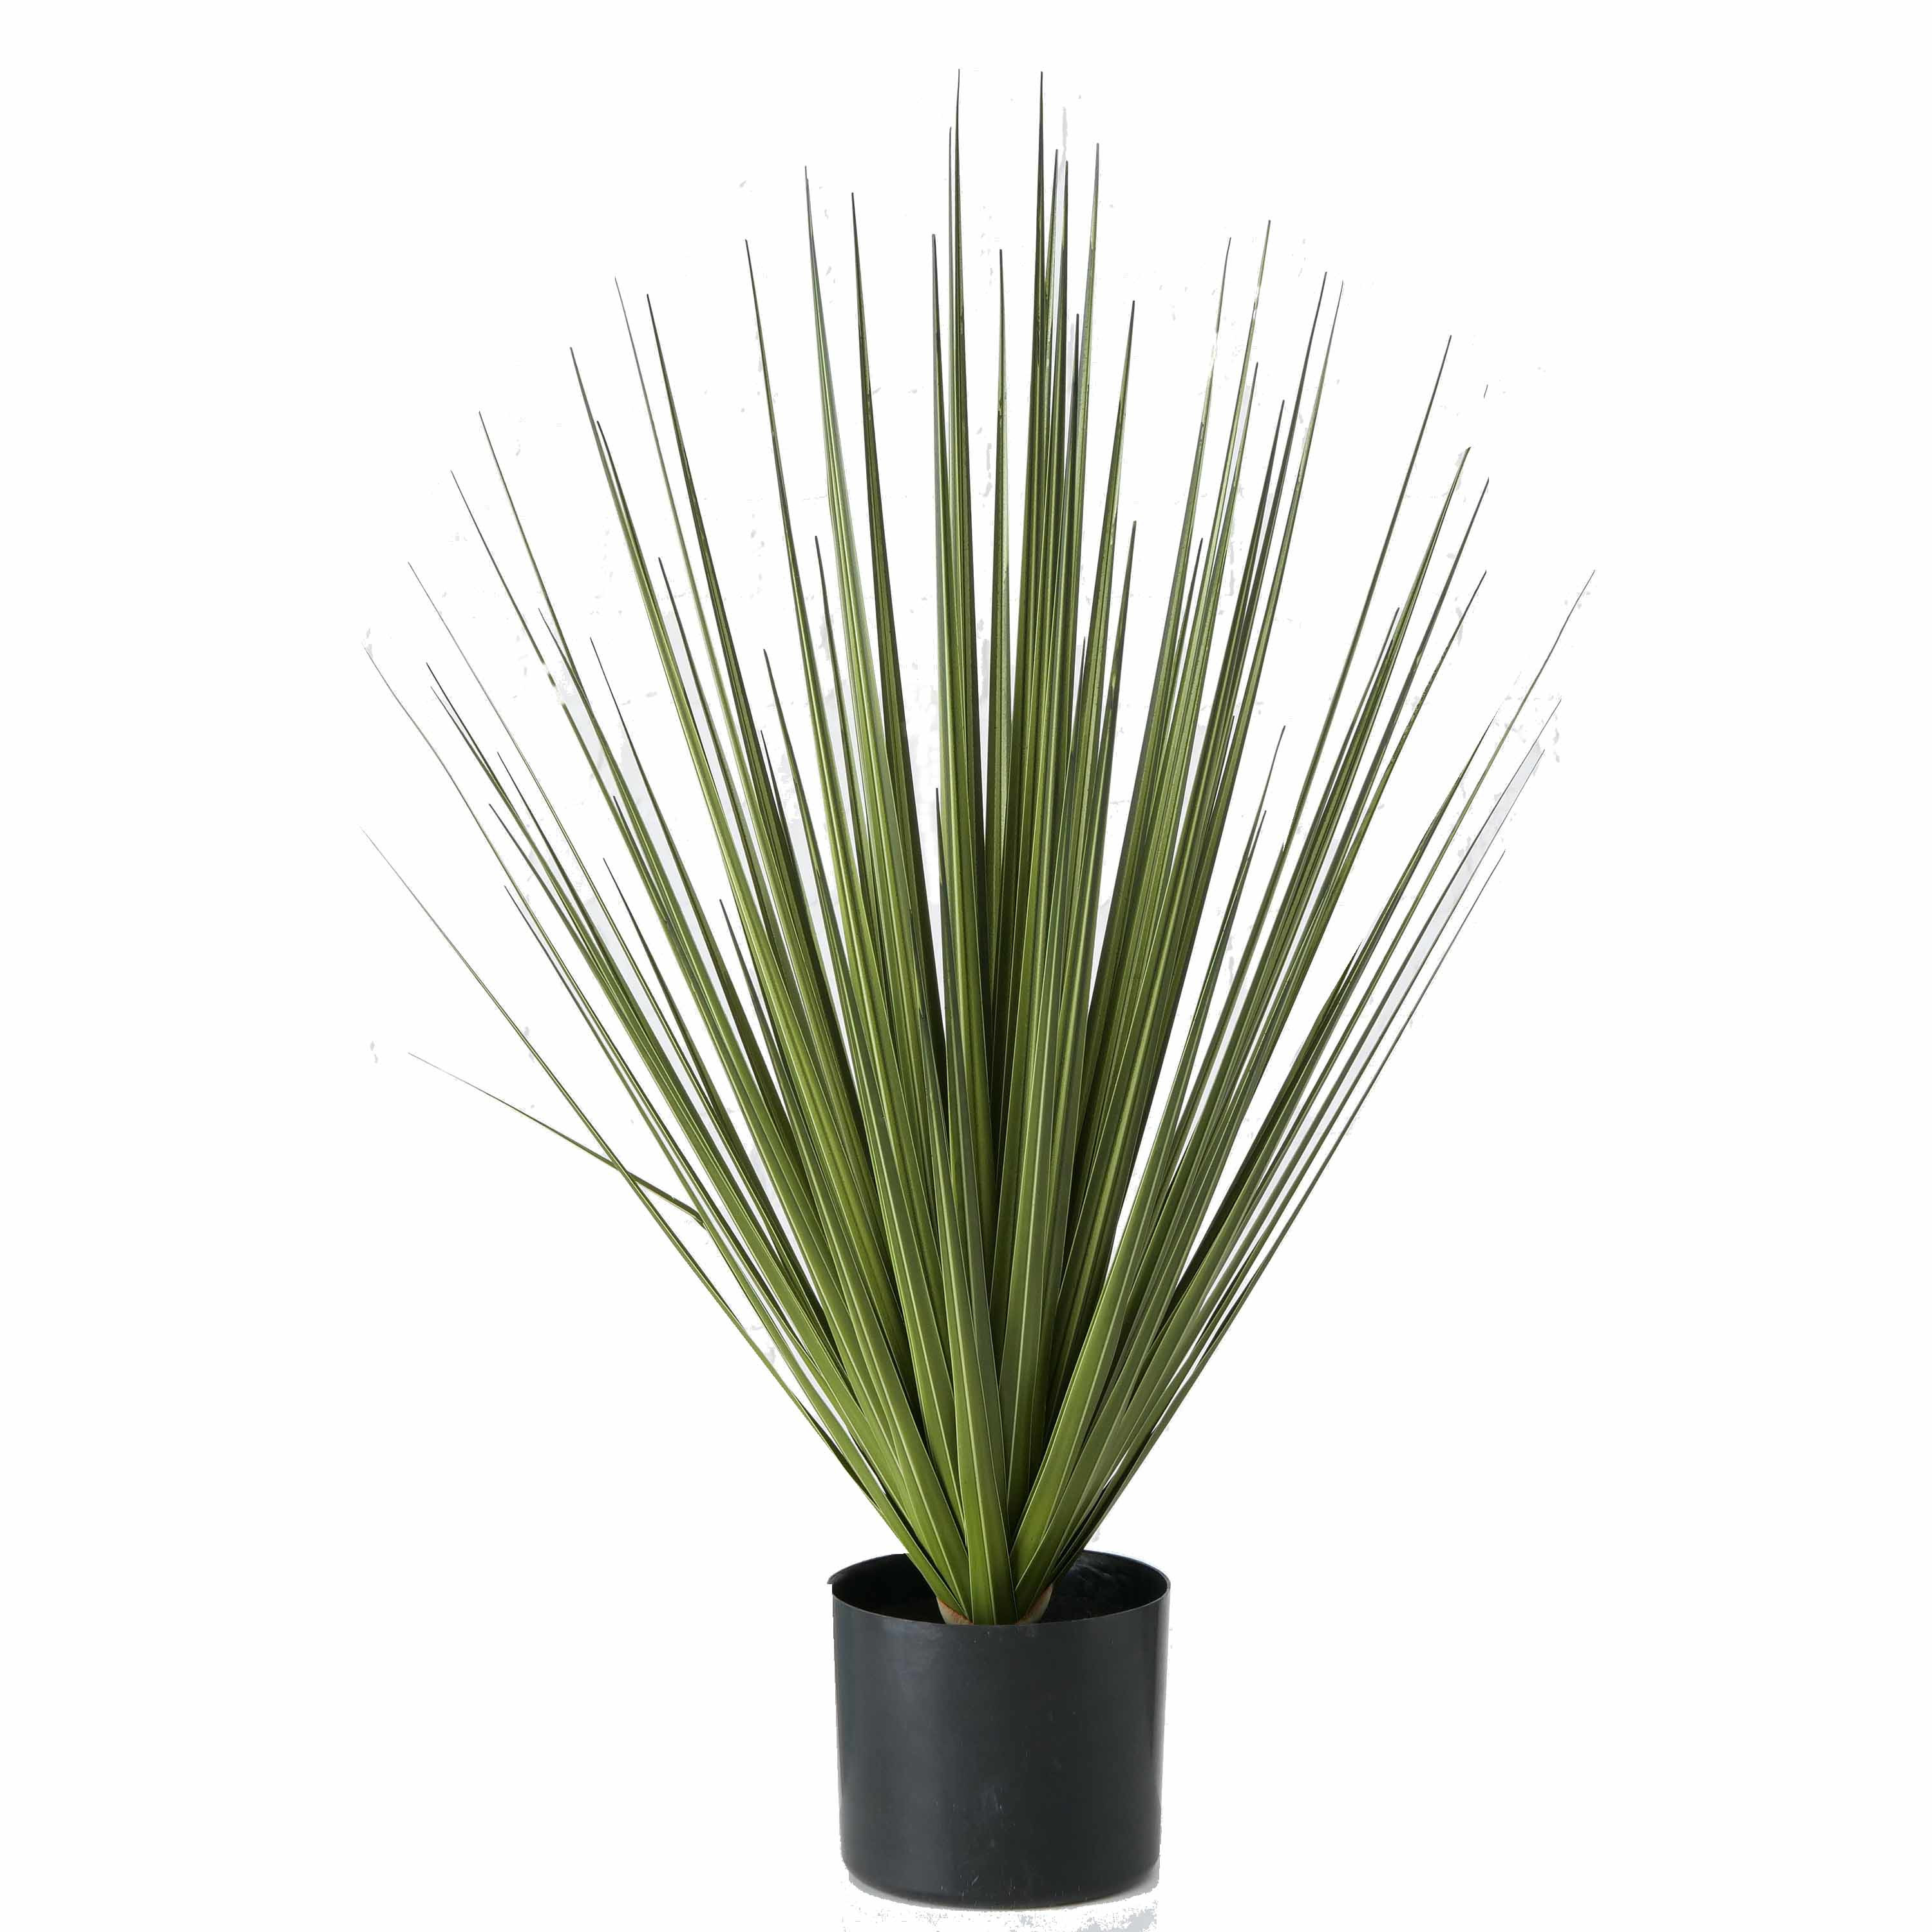 1x Groene grasplanten/kunstplanten Carex 68 cm in zwarte pot -